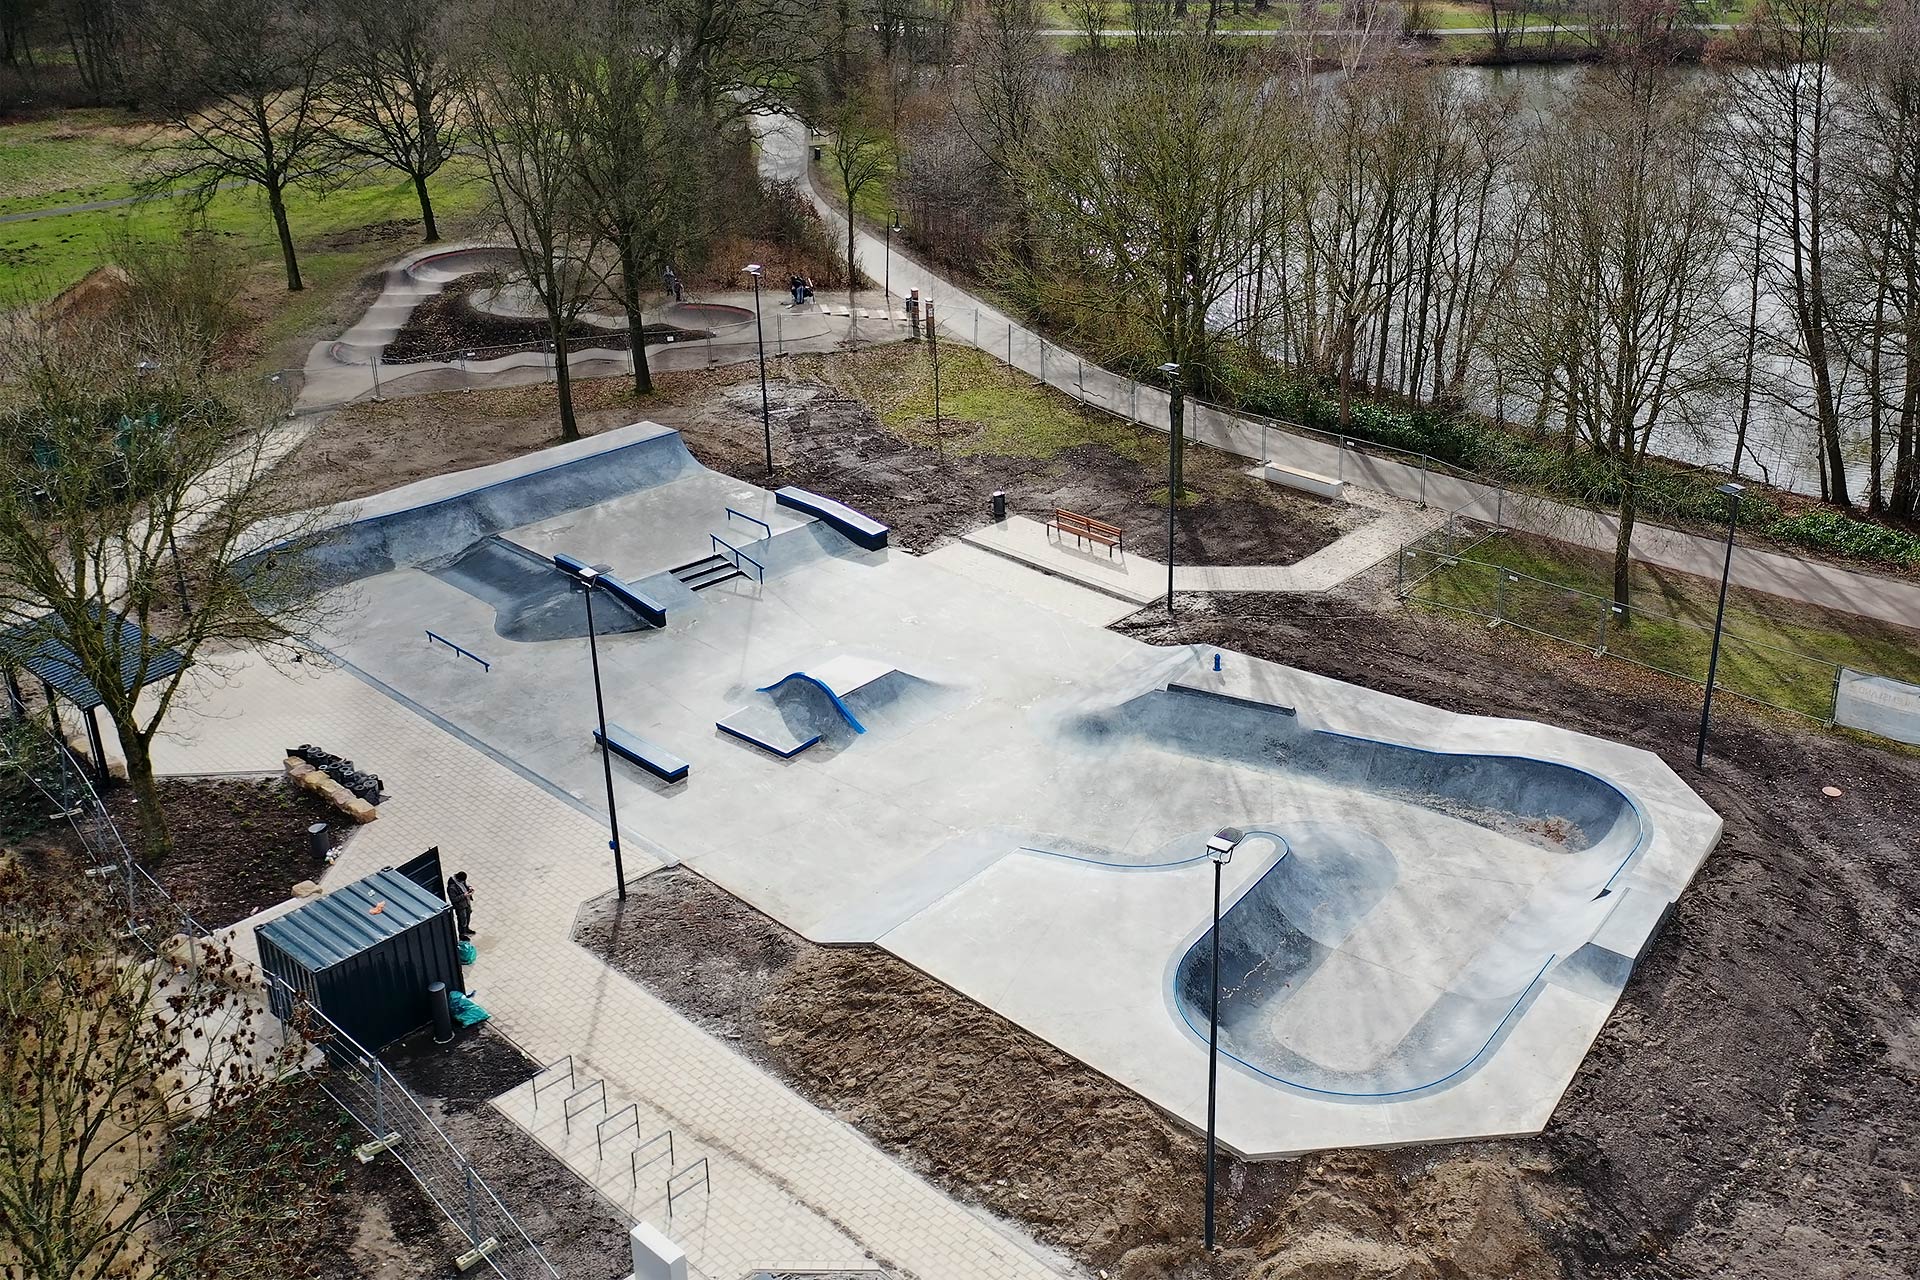 The new Ibbenbüren skatepark by Yamato Living Ramps is officially open